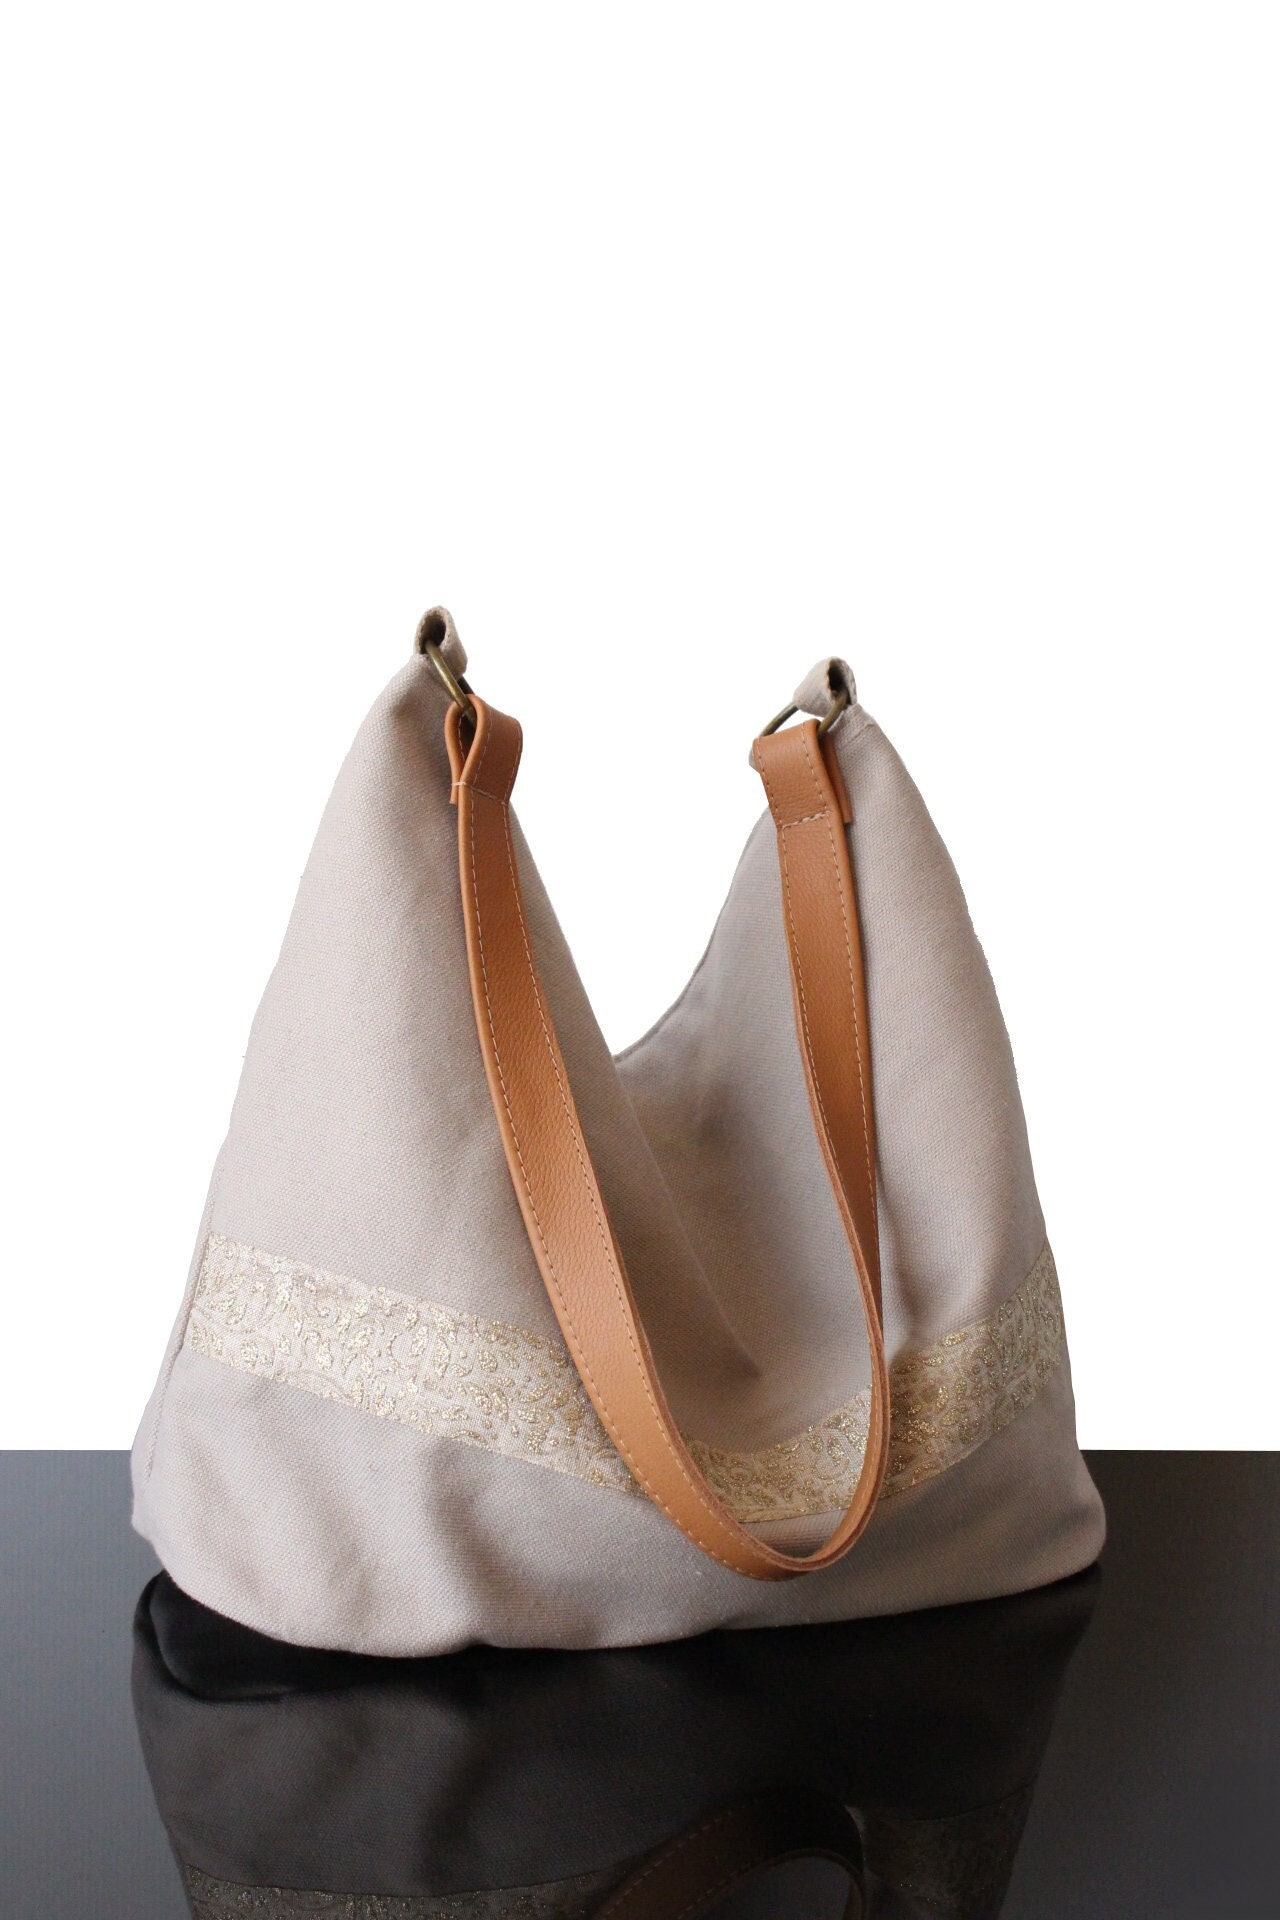 Hosby Women's Sparkling Bag Charm